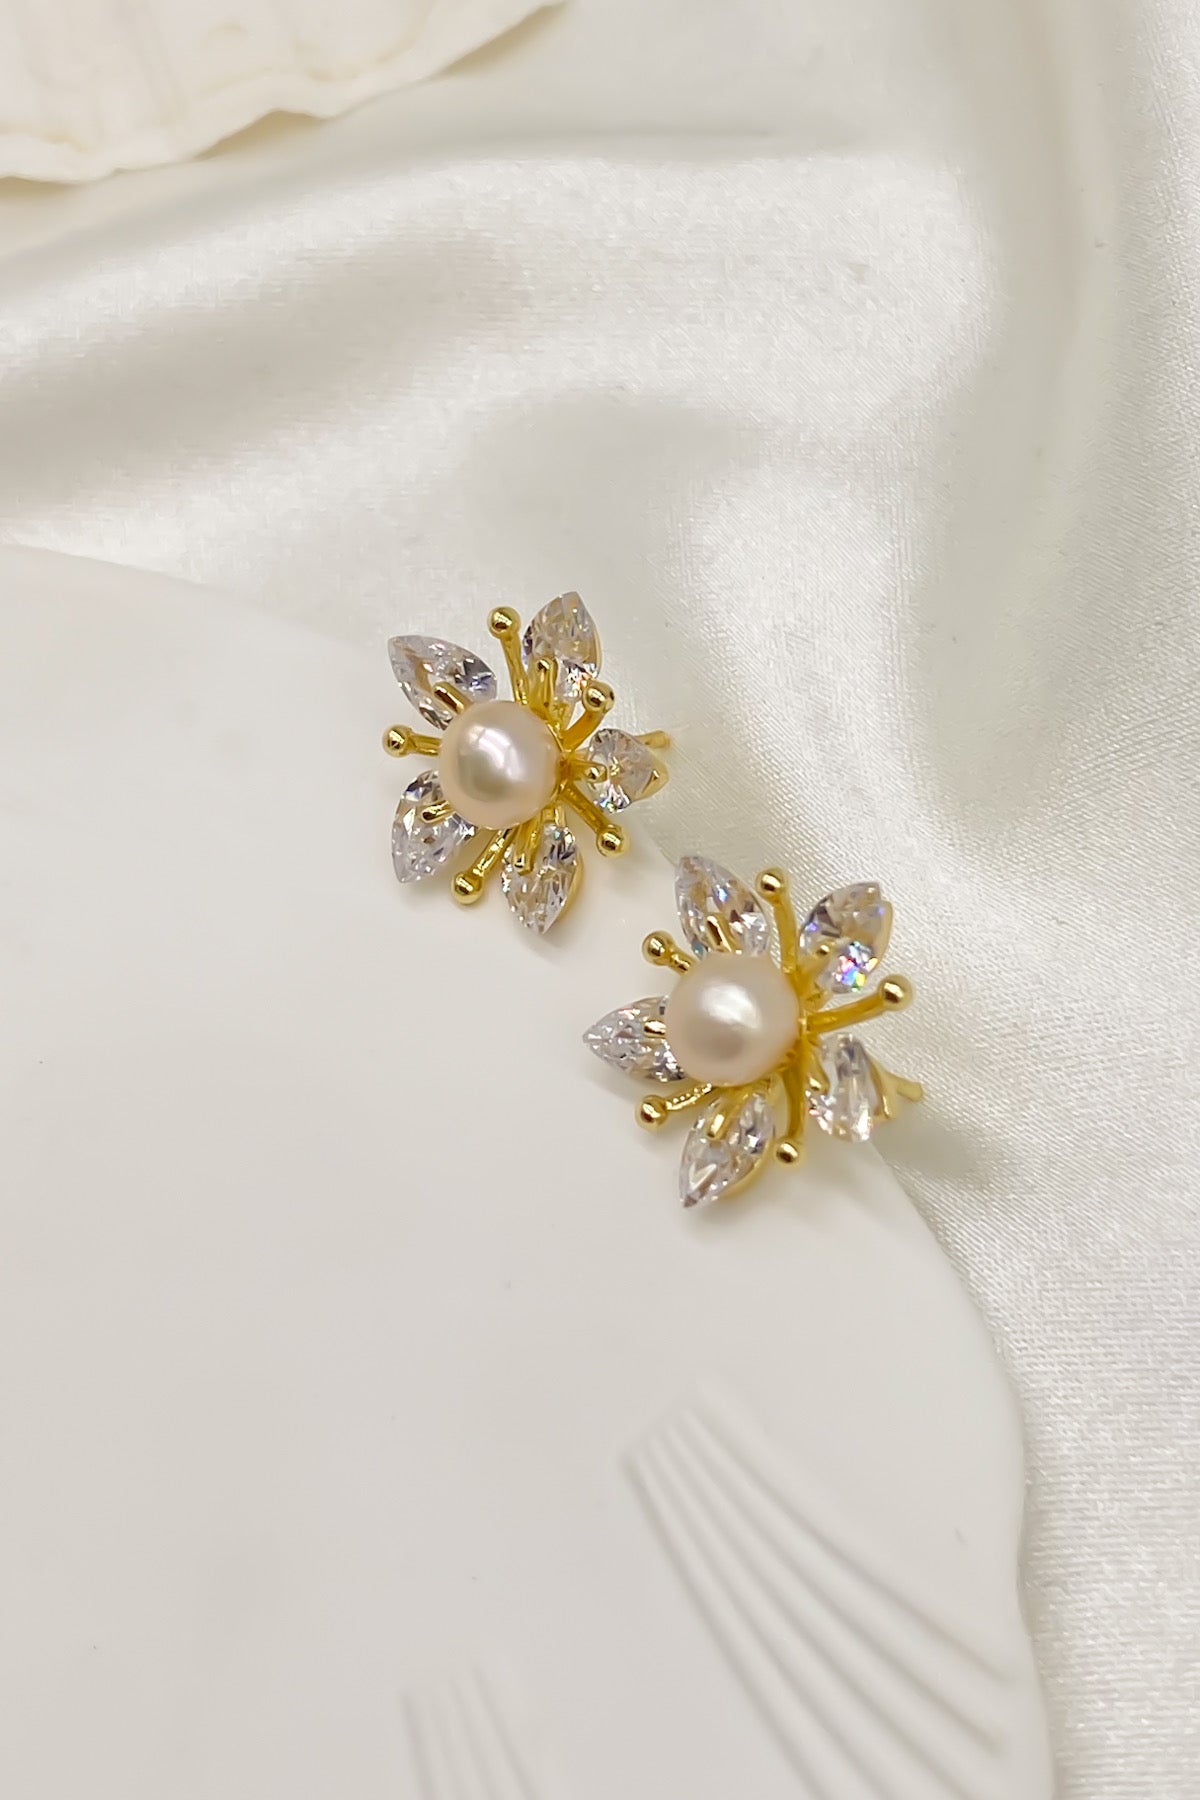 SKYE Shop Chic Modern Elegant Classy Women Jewelry French Parisian Minimalist Angelica Gold Pearl Sakura Flower Stud Earrings 2